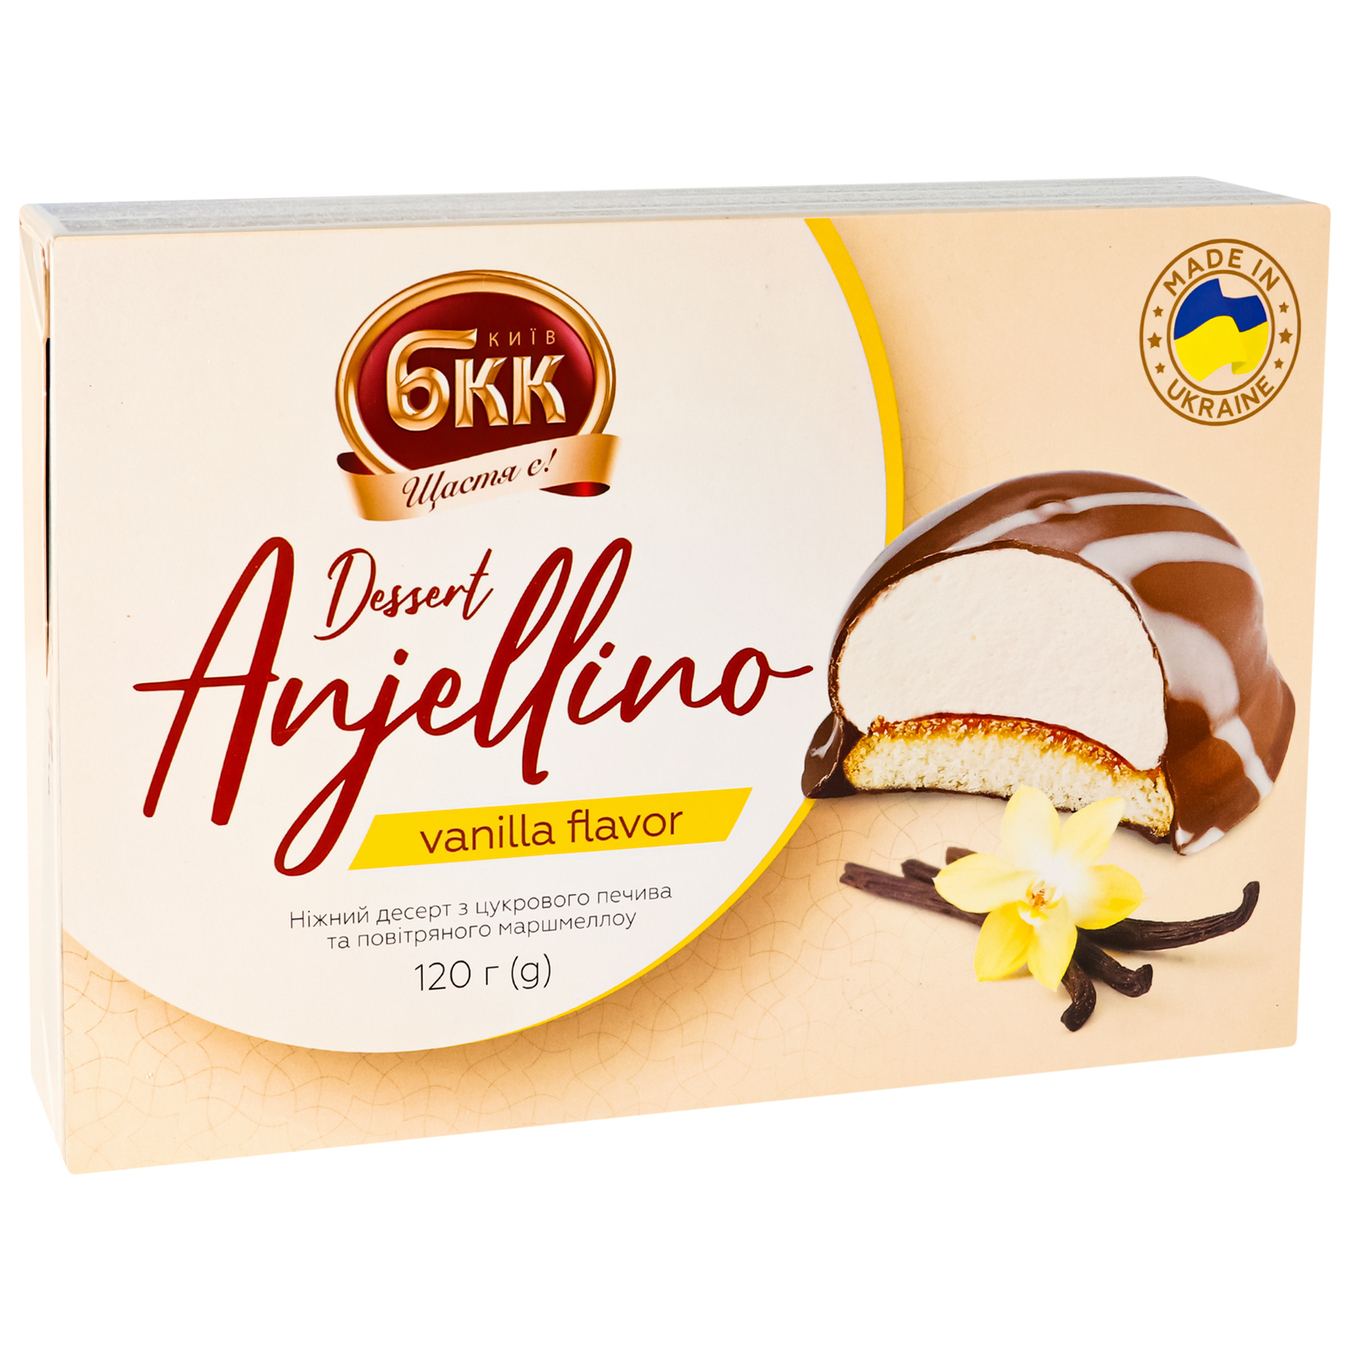 BKK Anjellino dessert with vanilla flavor 120g 5